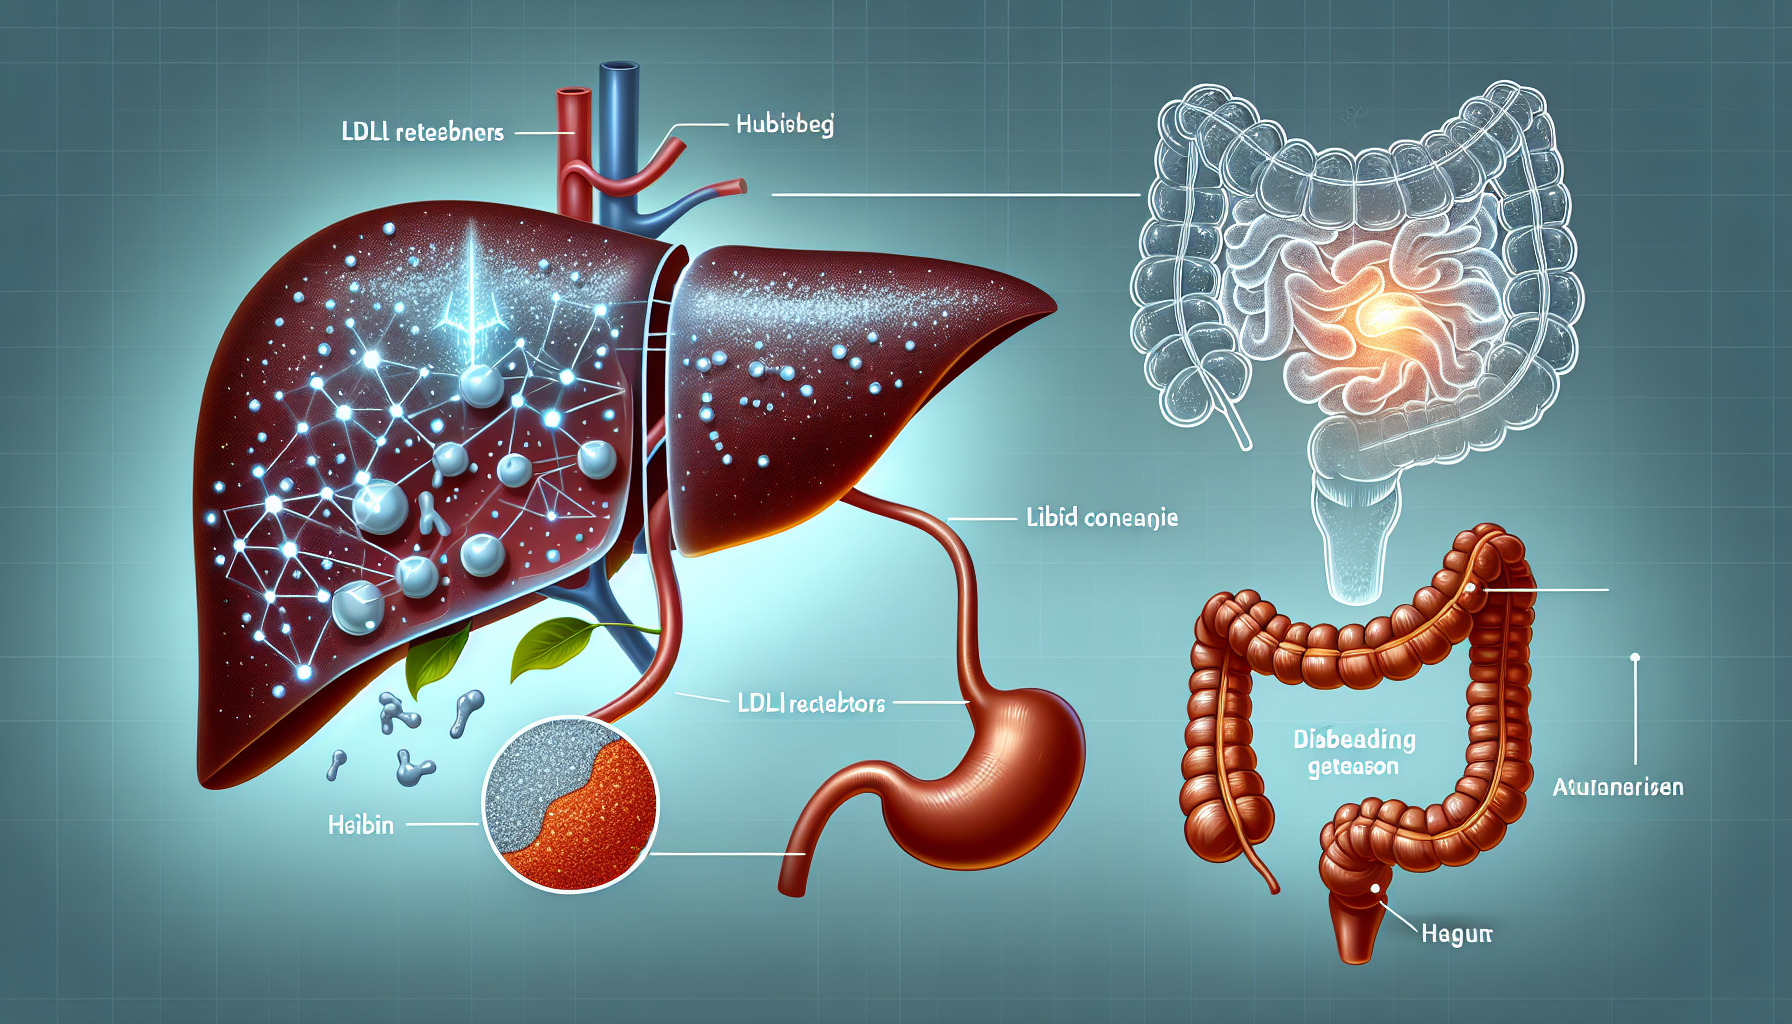 Regulation of lipid metabolism in the liver by berberine